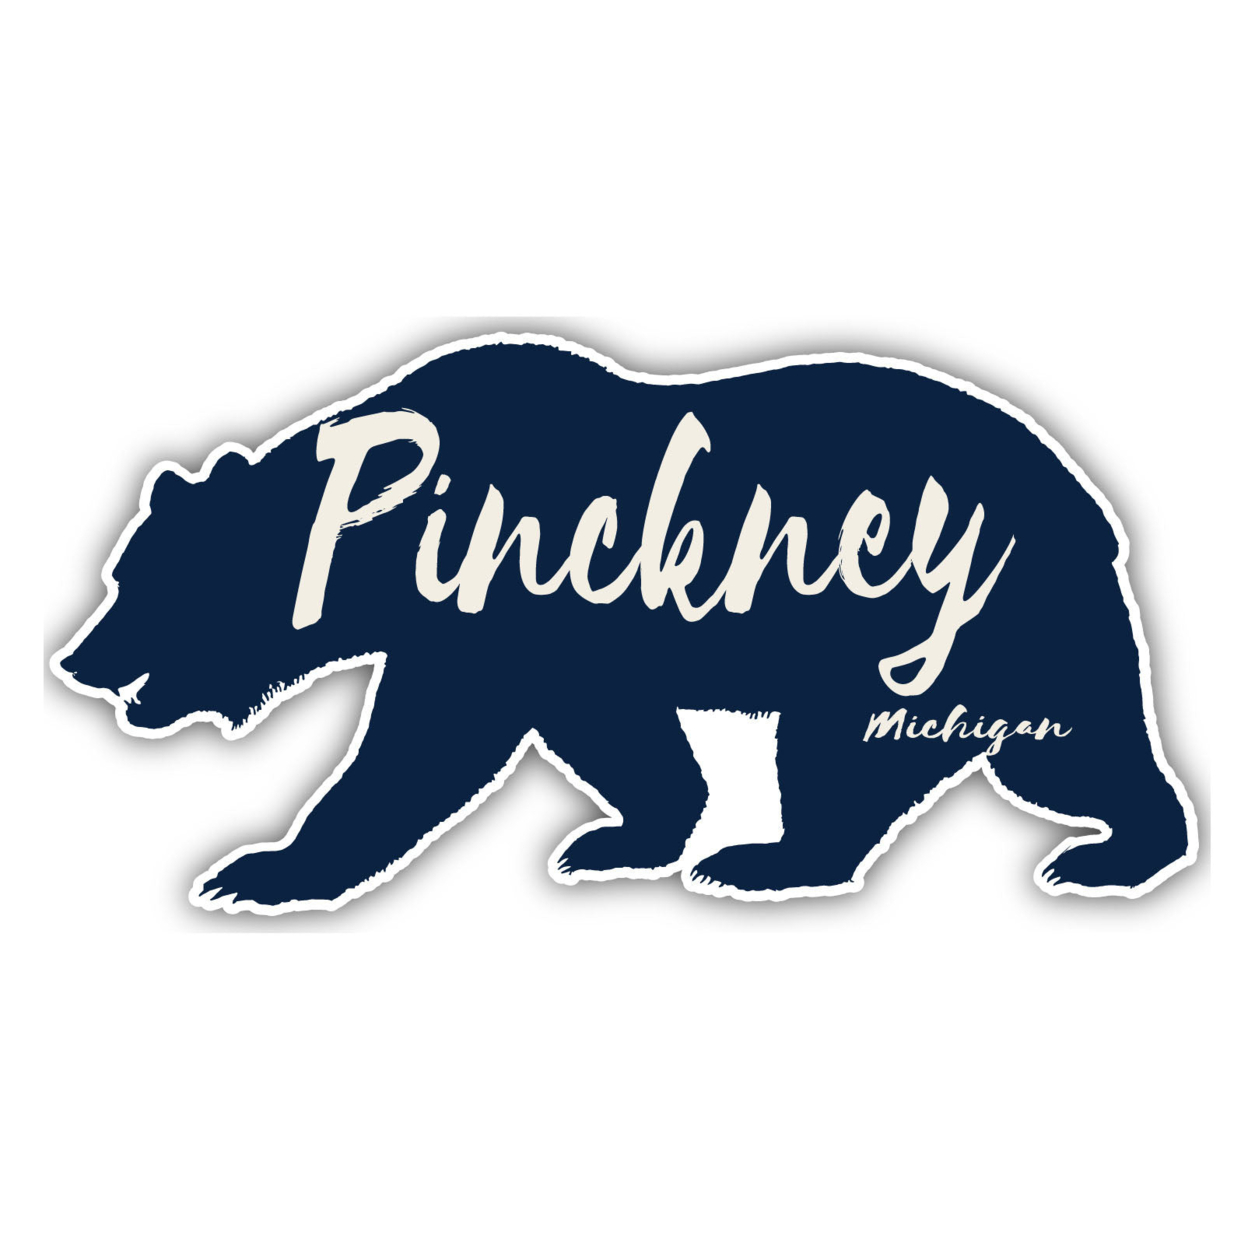 Pinckney Michigan Souvenir Decorative Stickers (Choose Theme And Size) - Single Unit, 2-Inch, Tent